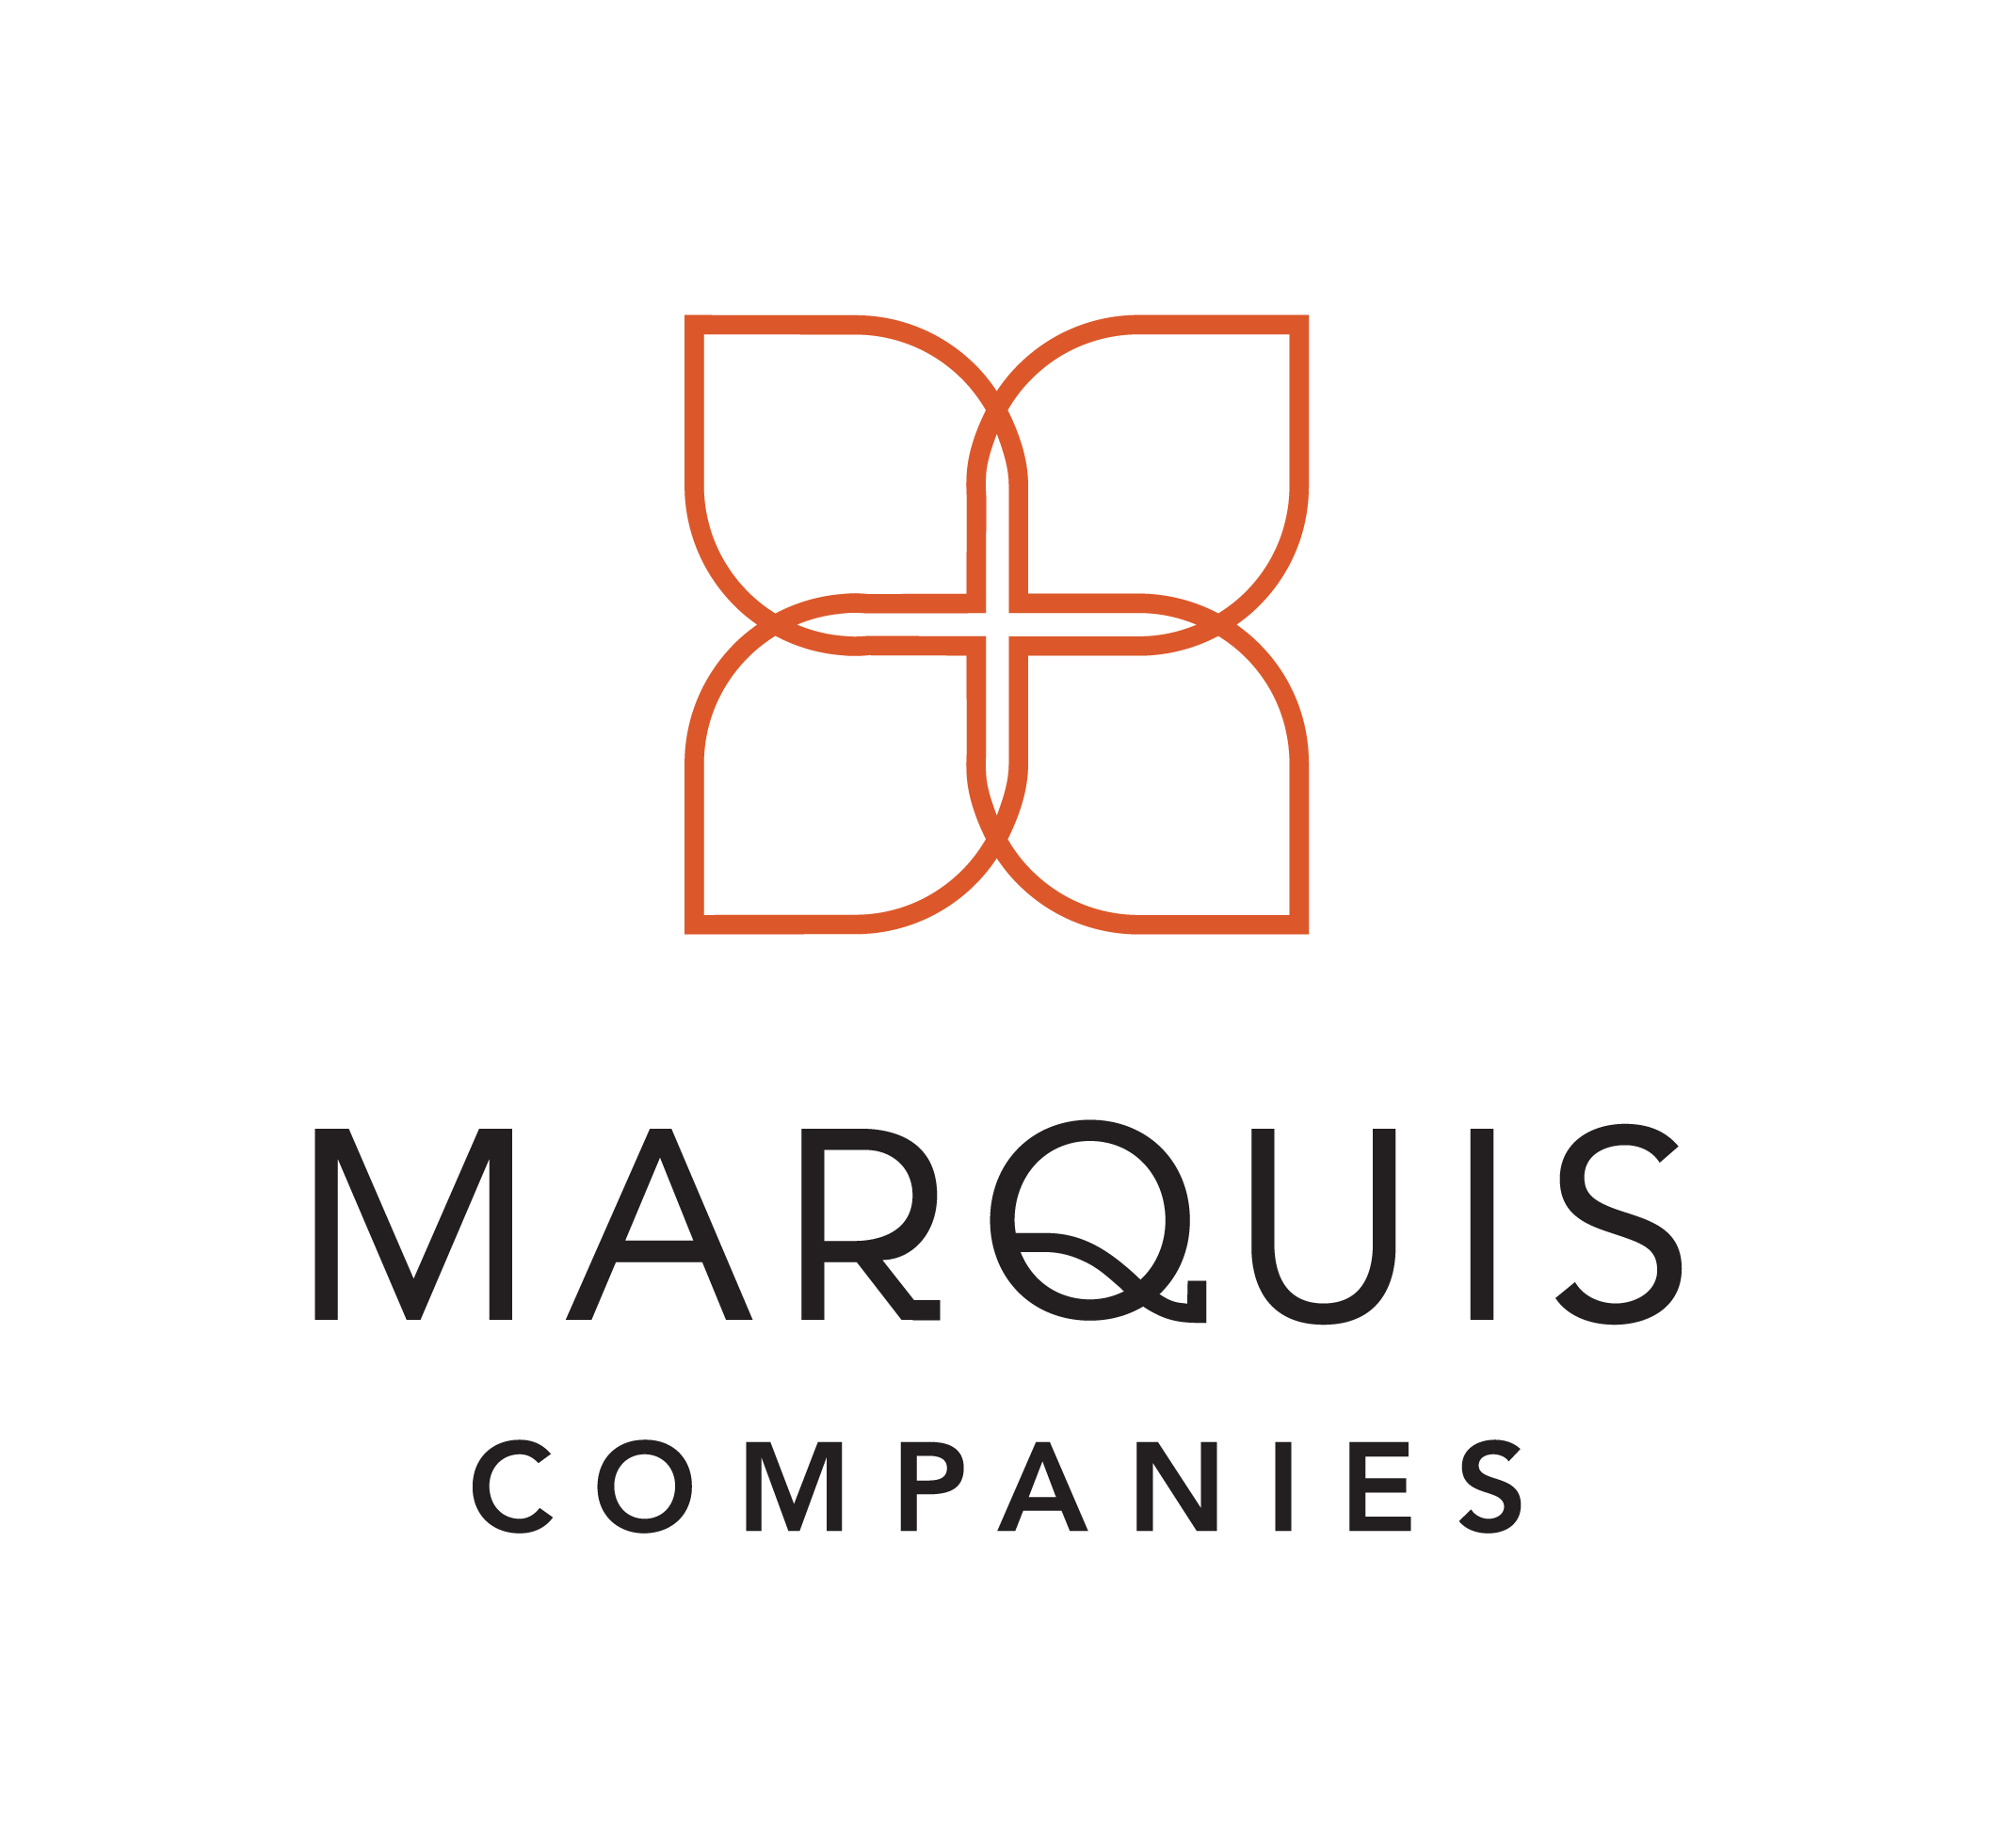 Marquis logo